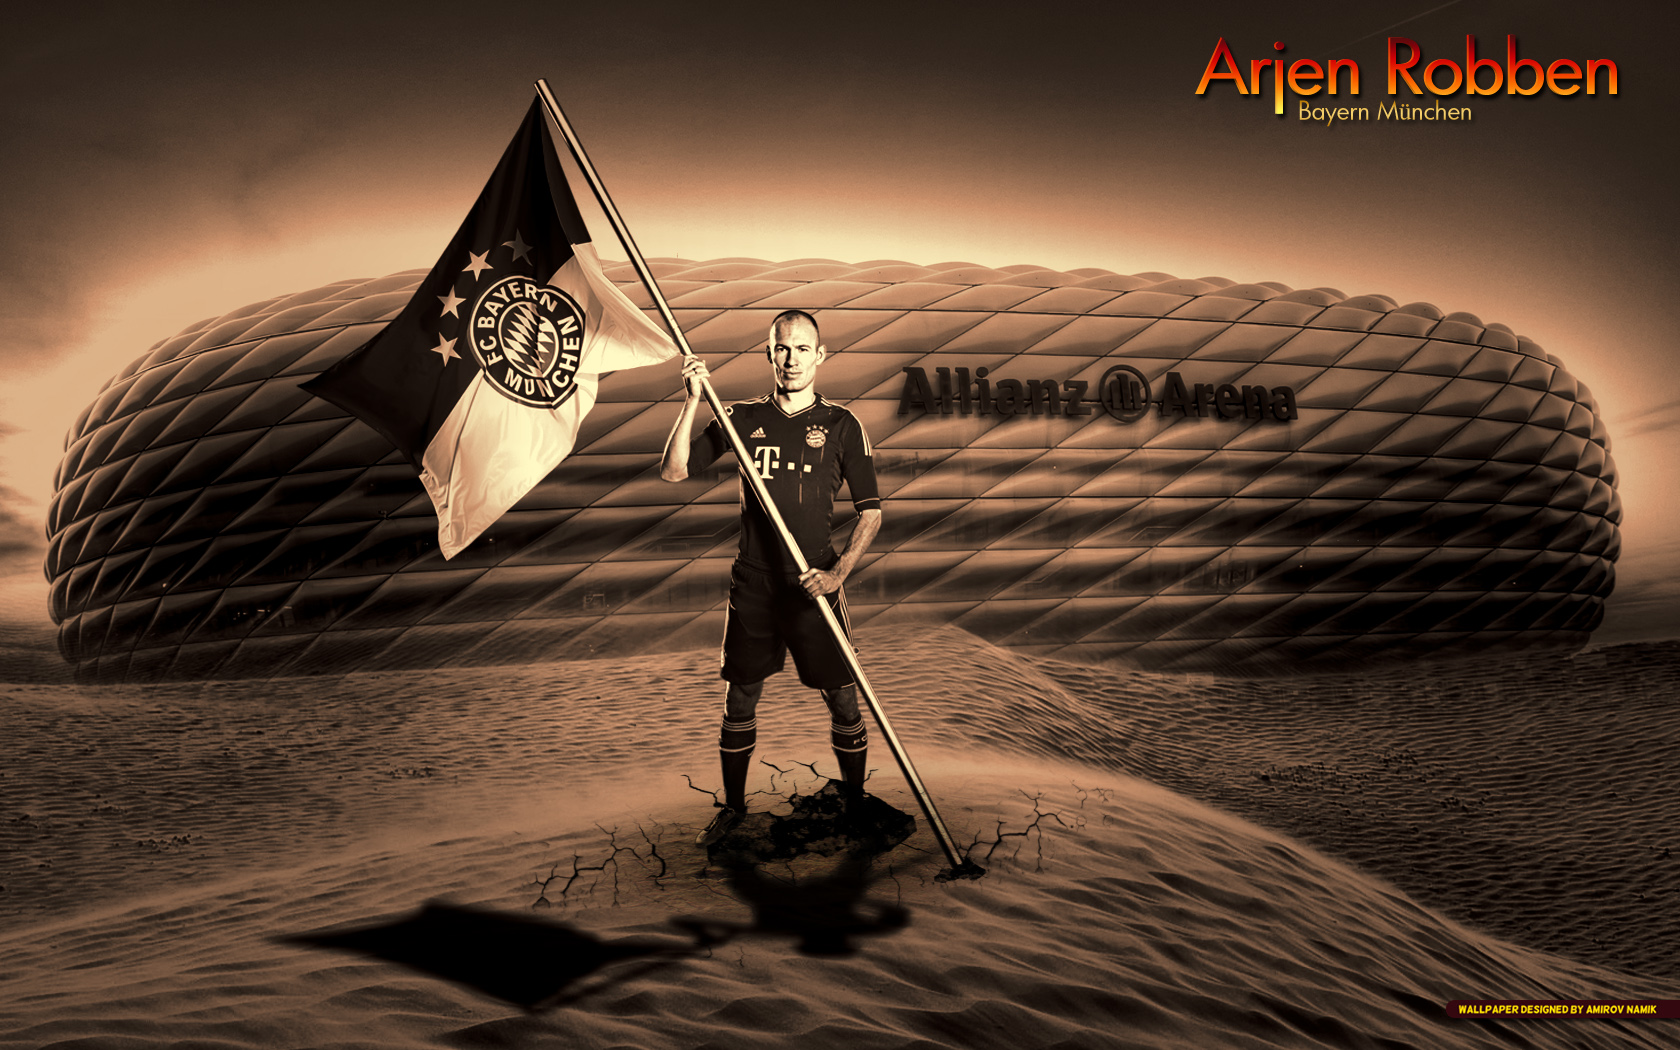 Arjen Robben Picture by Namik Amirov